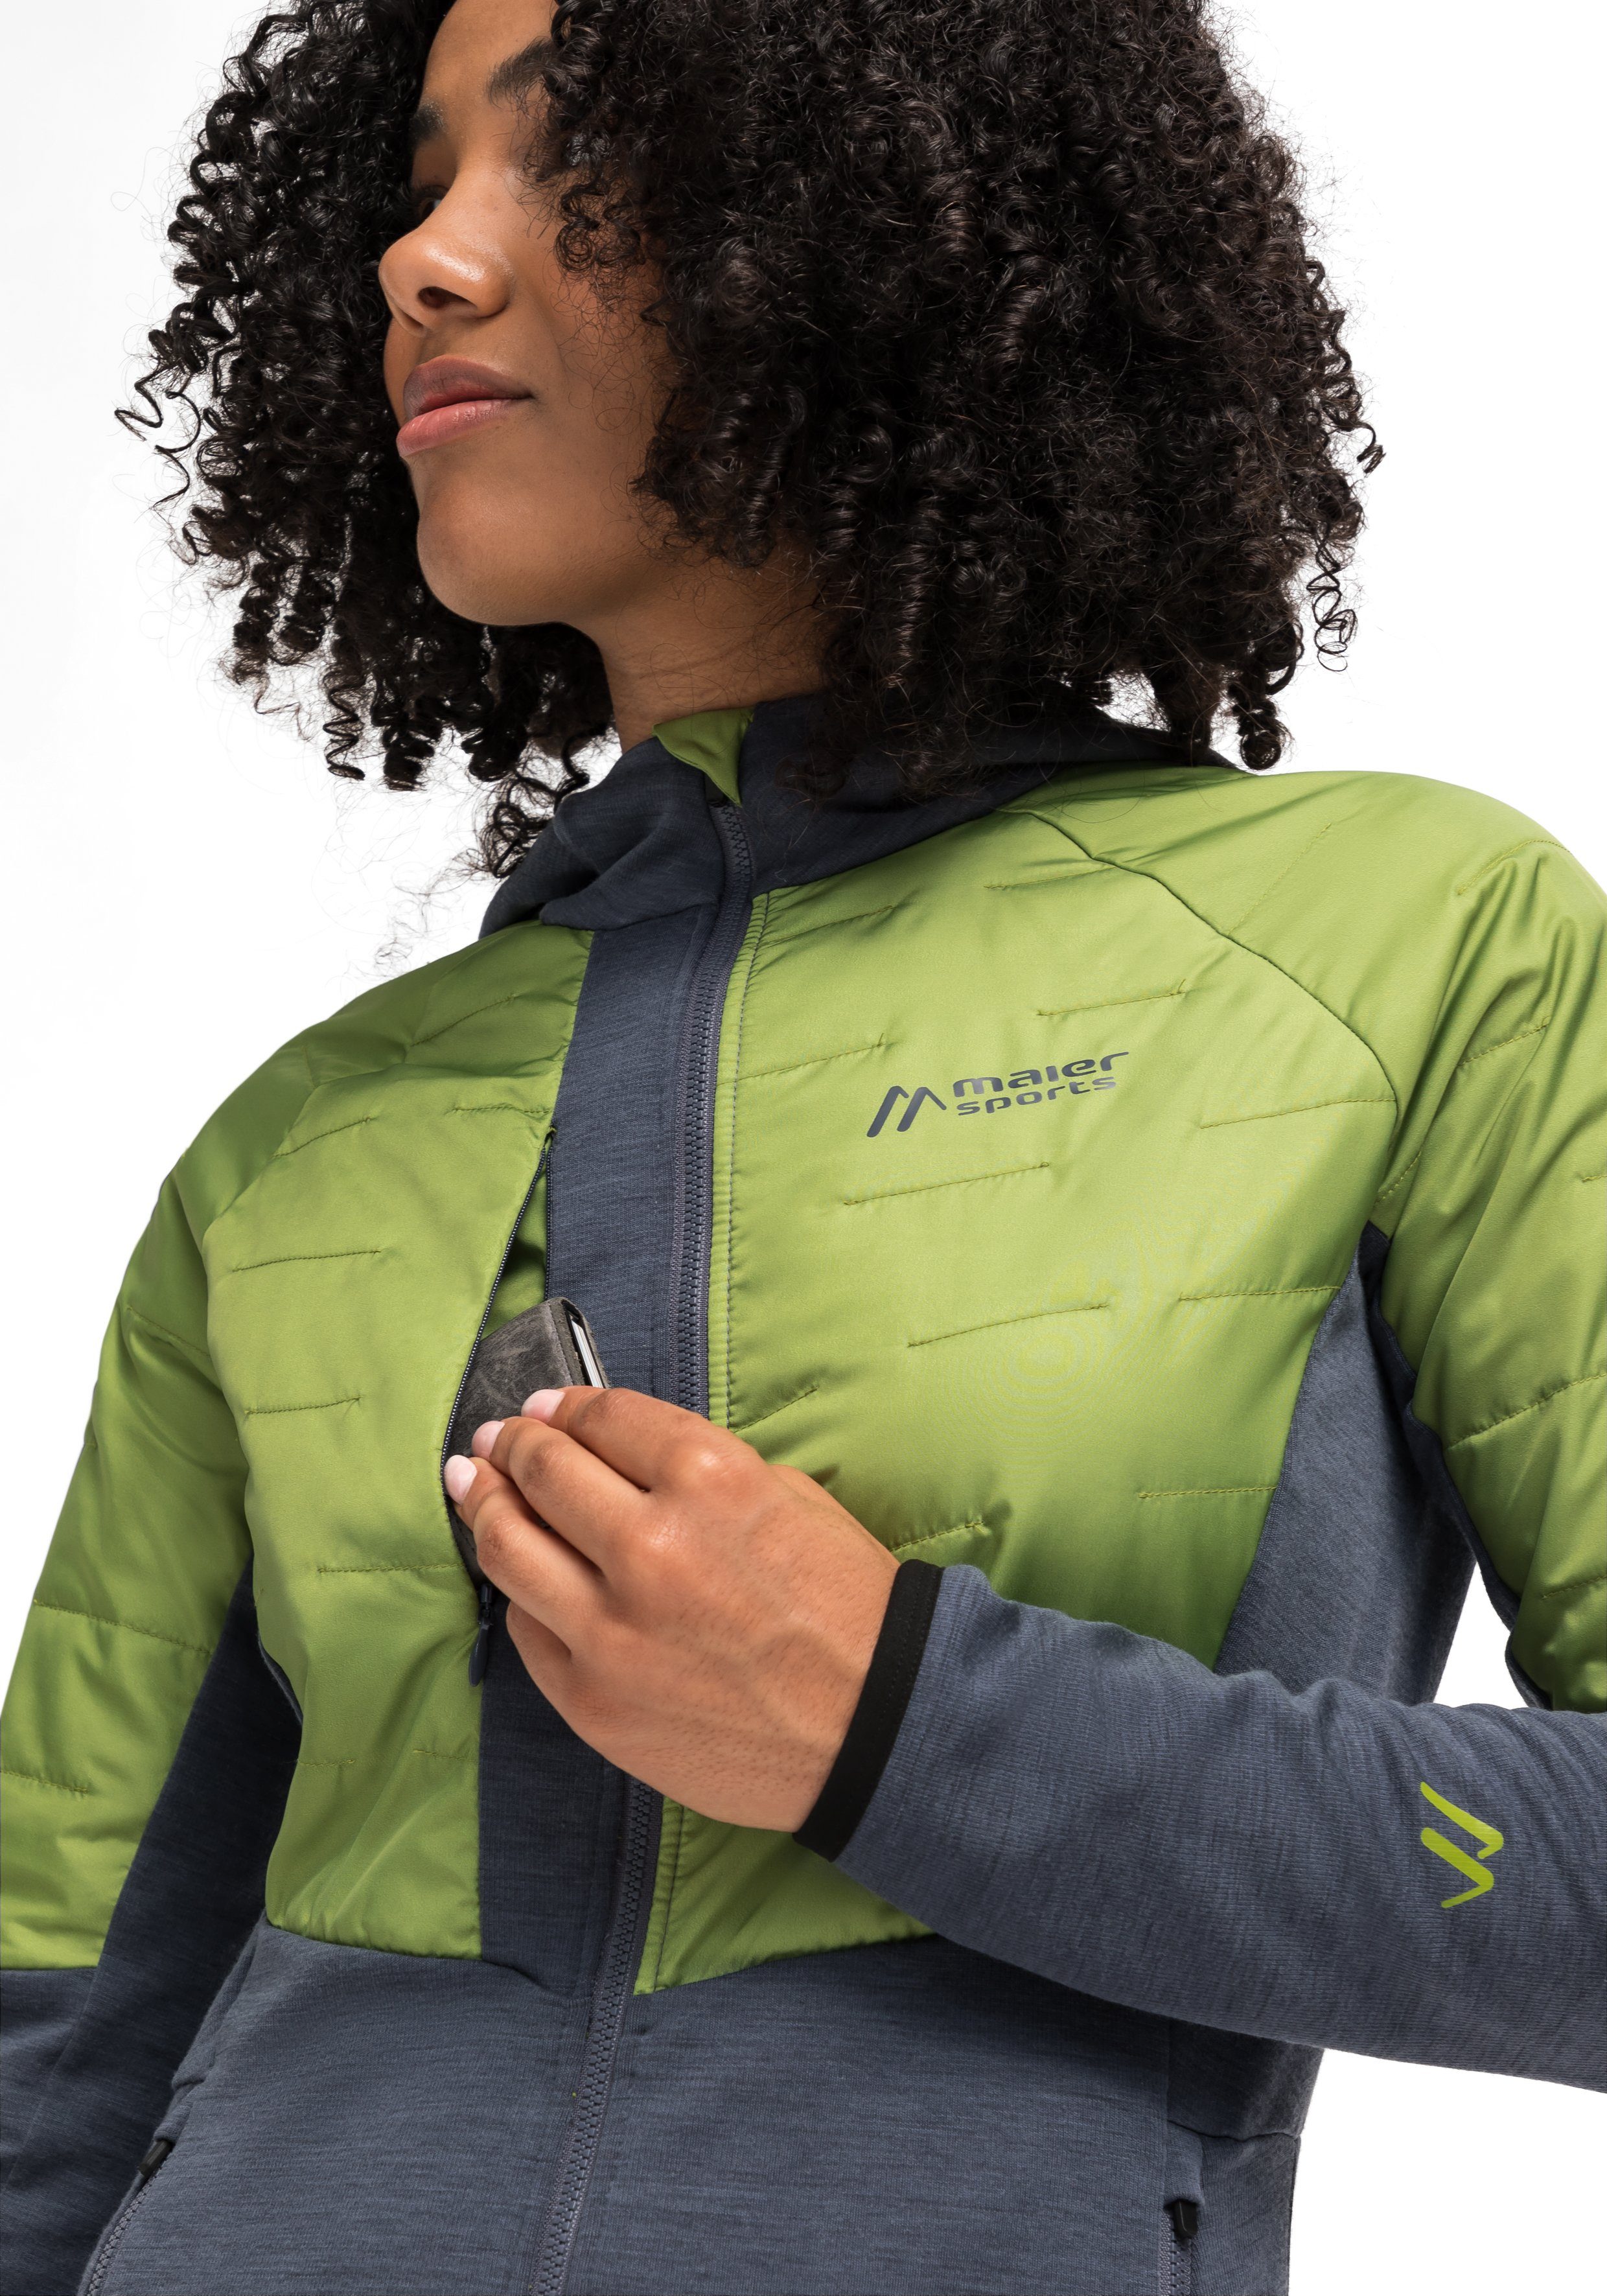 Damen wattiert, Wanderjacke Outdoorjacke atmungsaktive 3 Sports Trekking-Jacke Taschen Lanus Maier W grasgrün mit